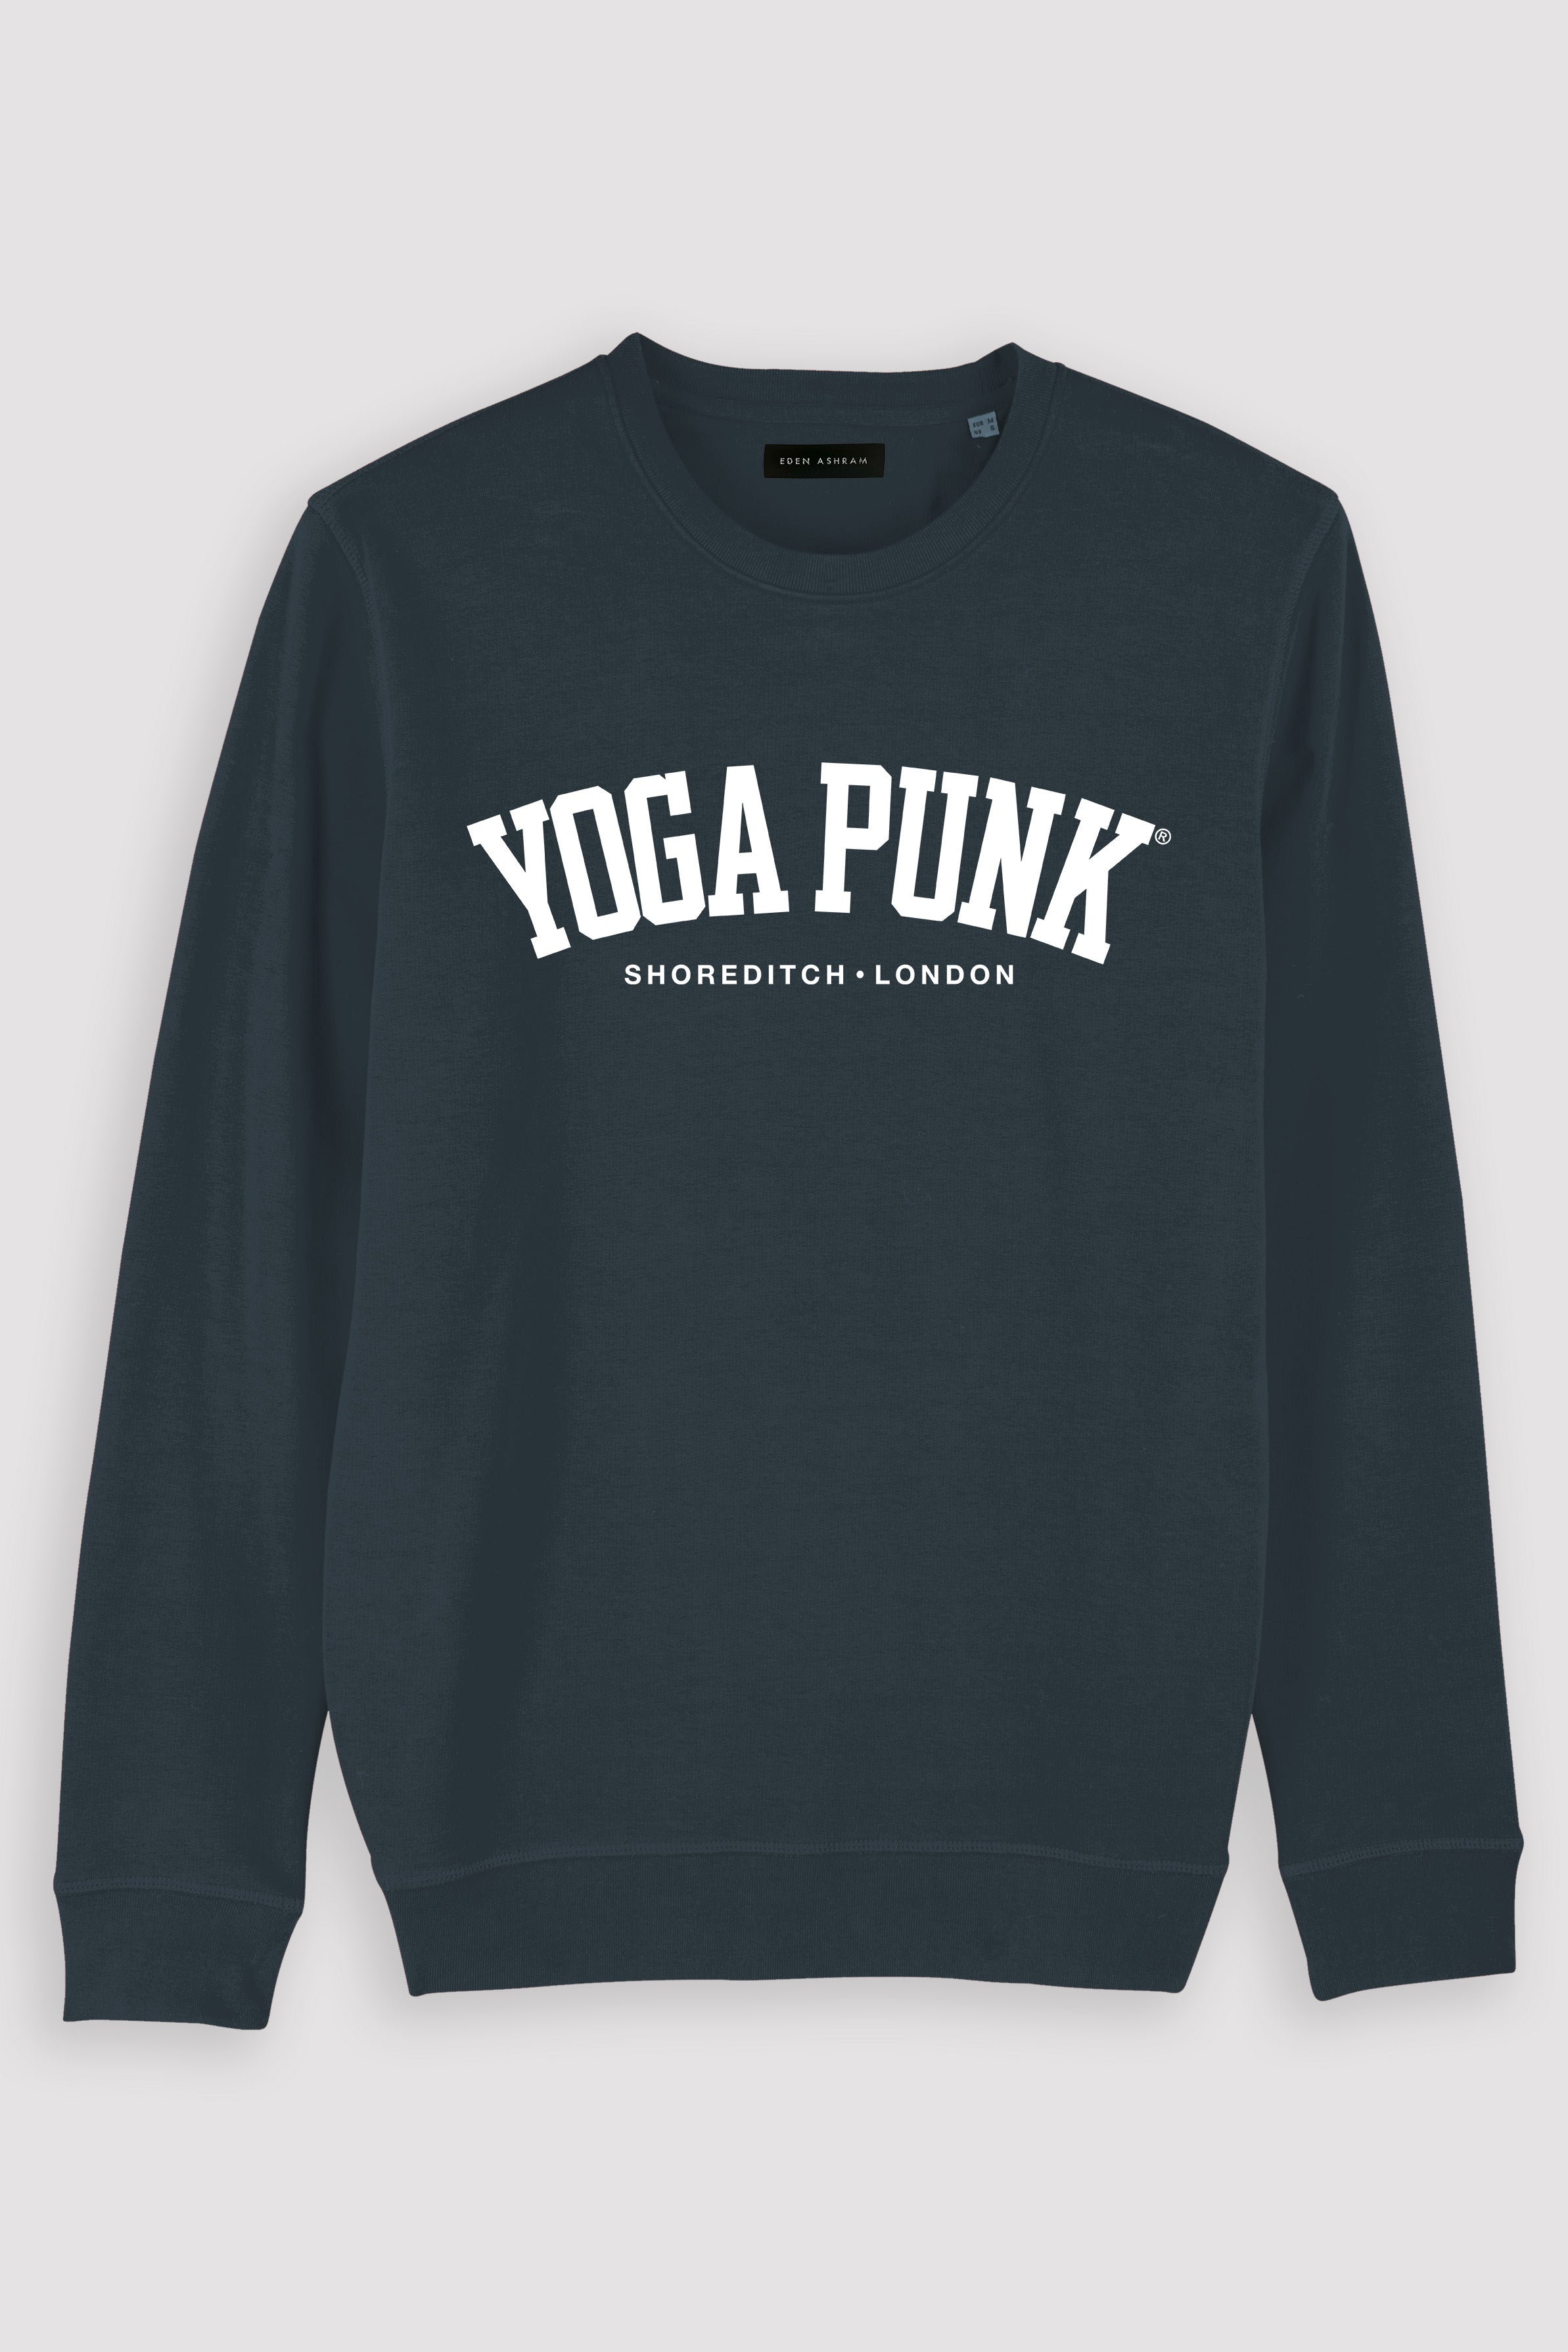 EDEN ASHRAM Yoga Punk Premium Crew Neck Sweatshirt India Ink Grey